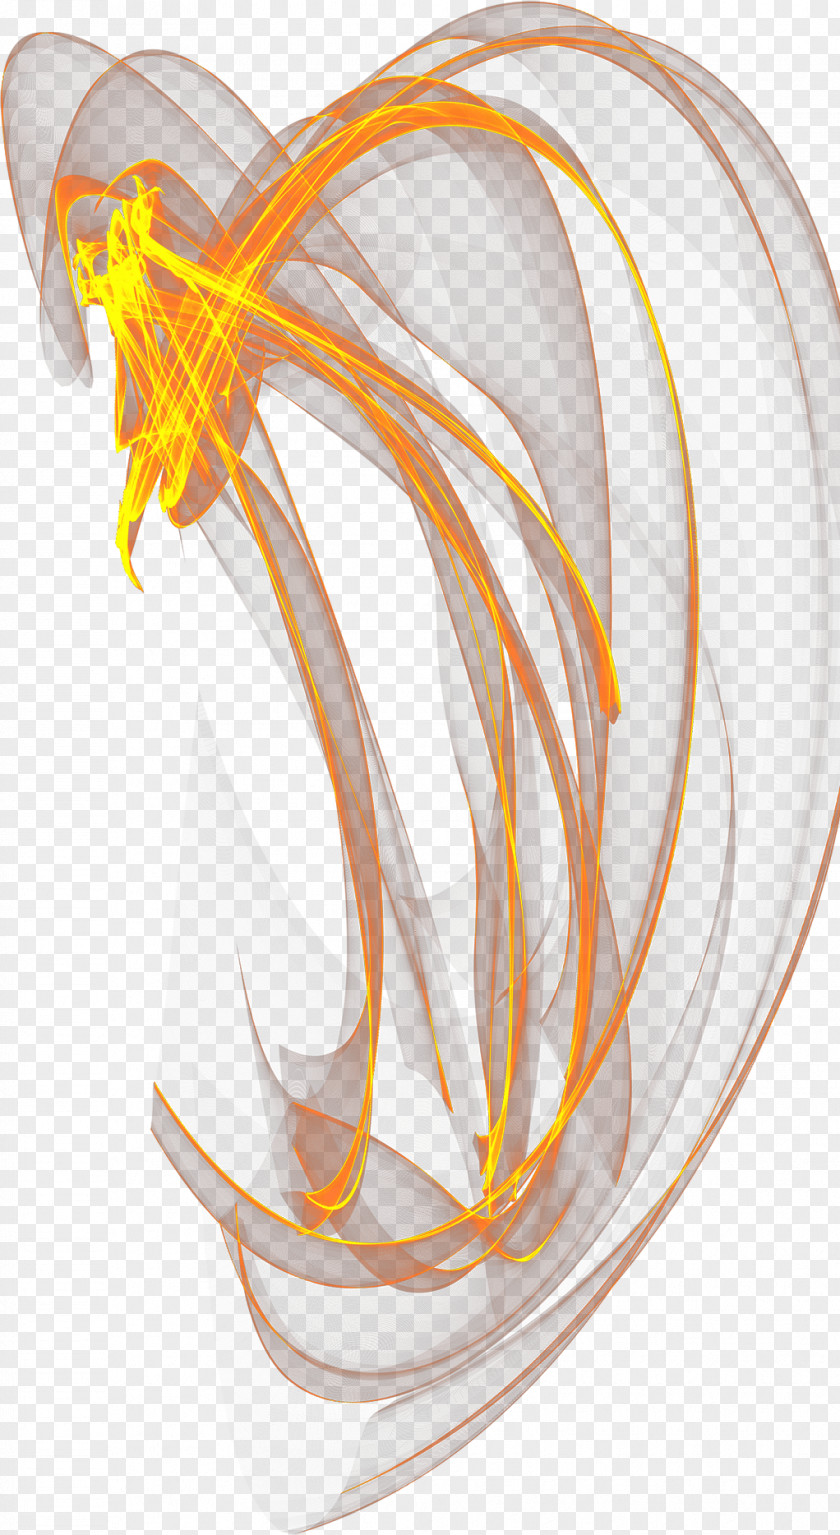 Beyaz Blaze Flame Image Design Vector Graphics PNG